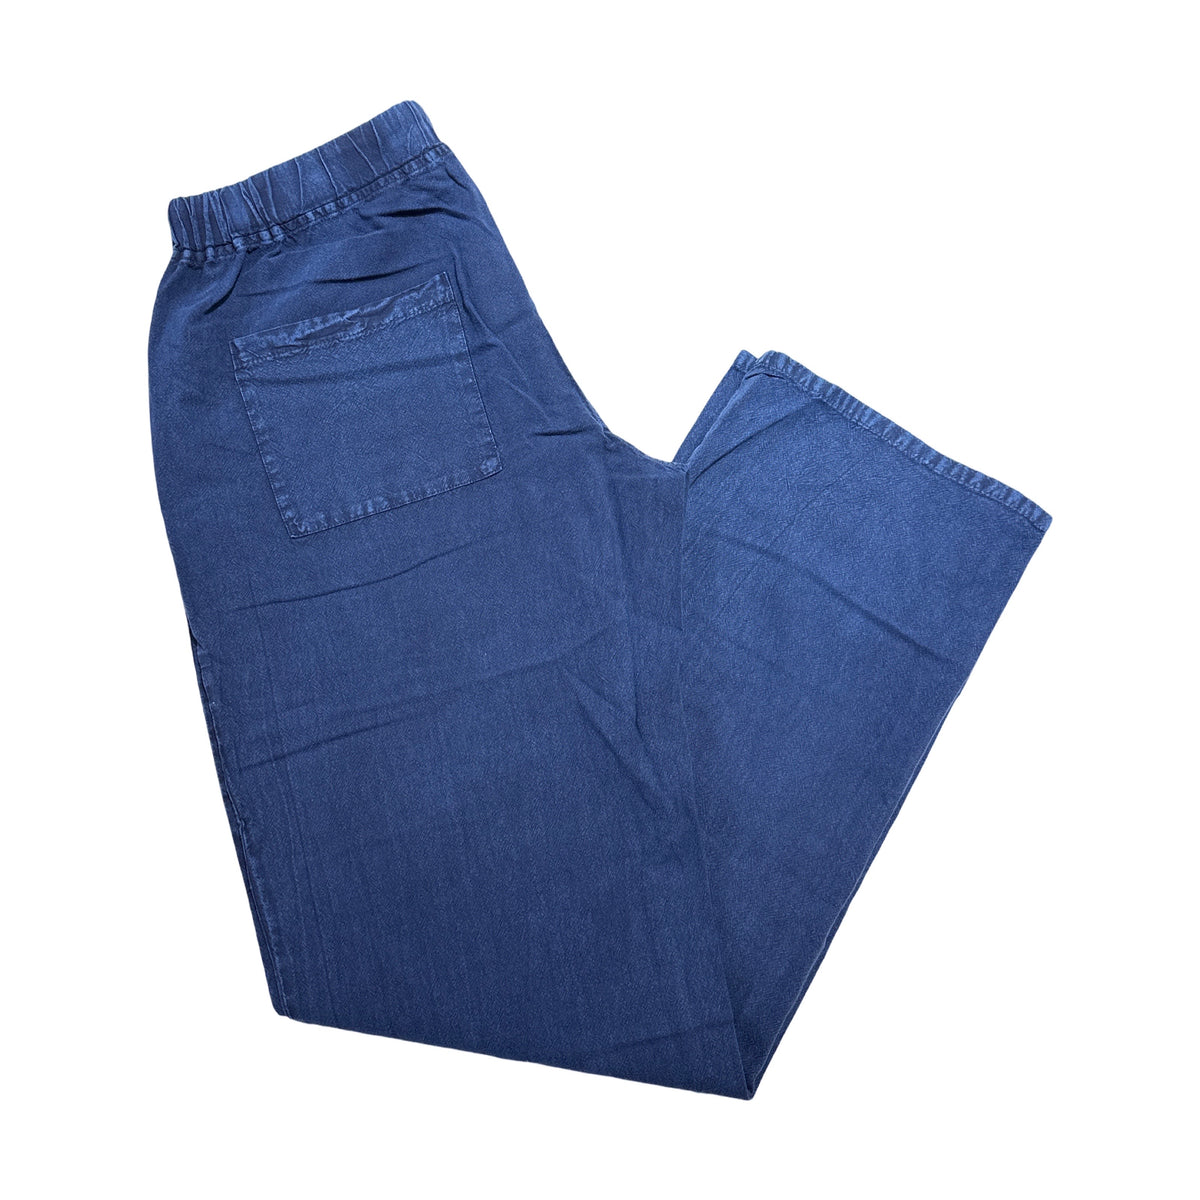 Seaspice Navy Double Pocket Peruvian Cotton Pants